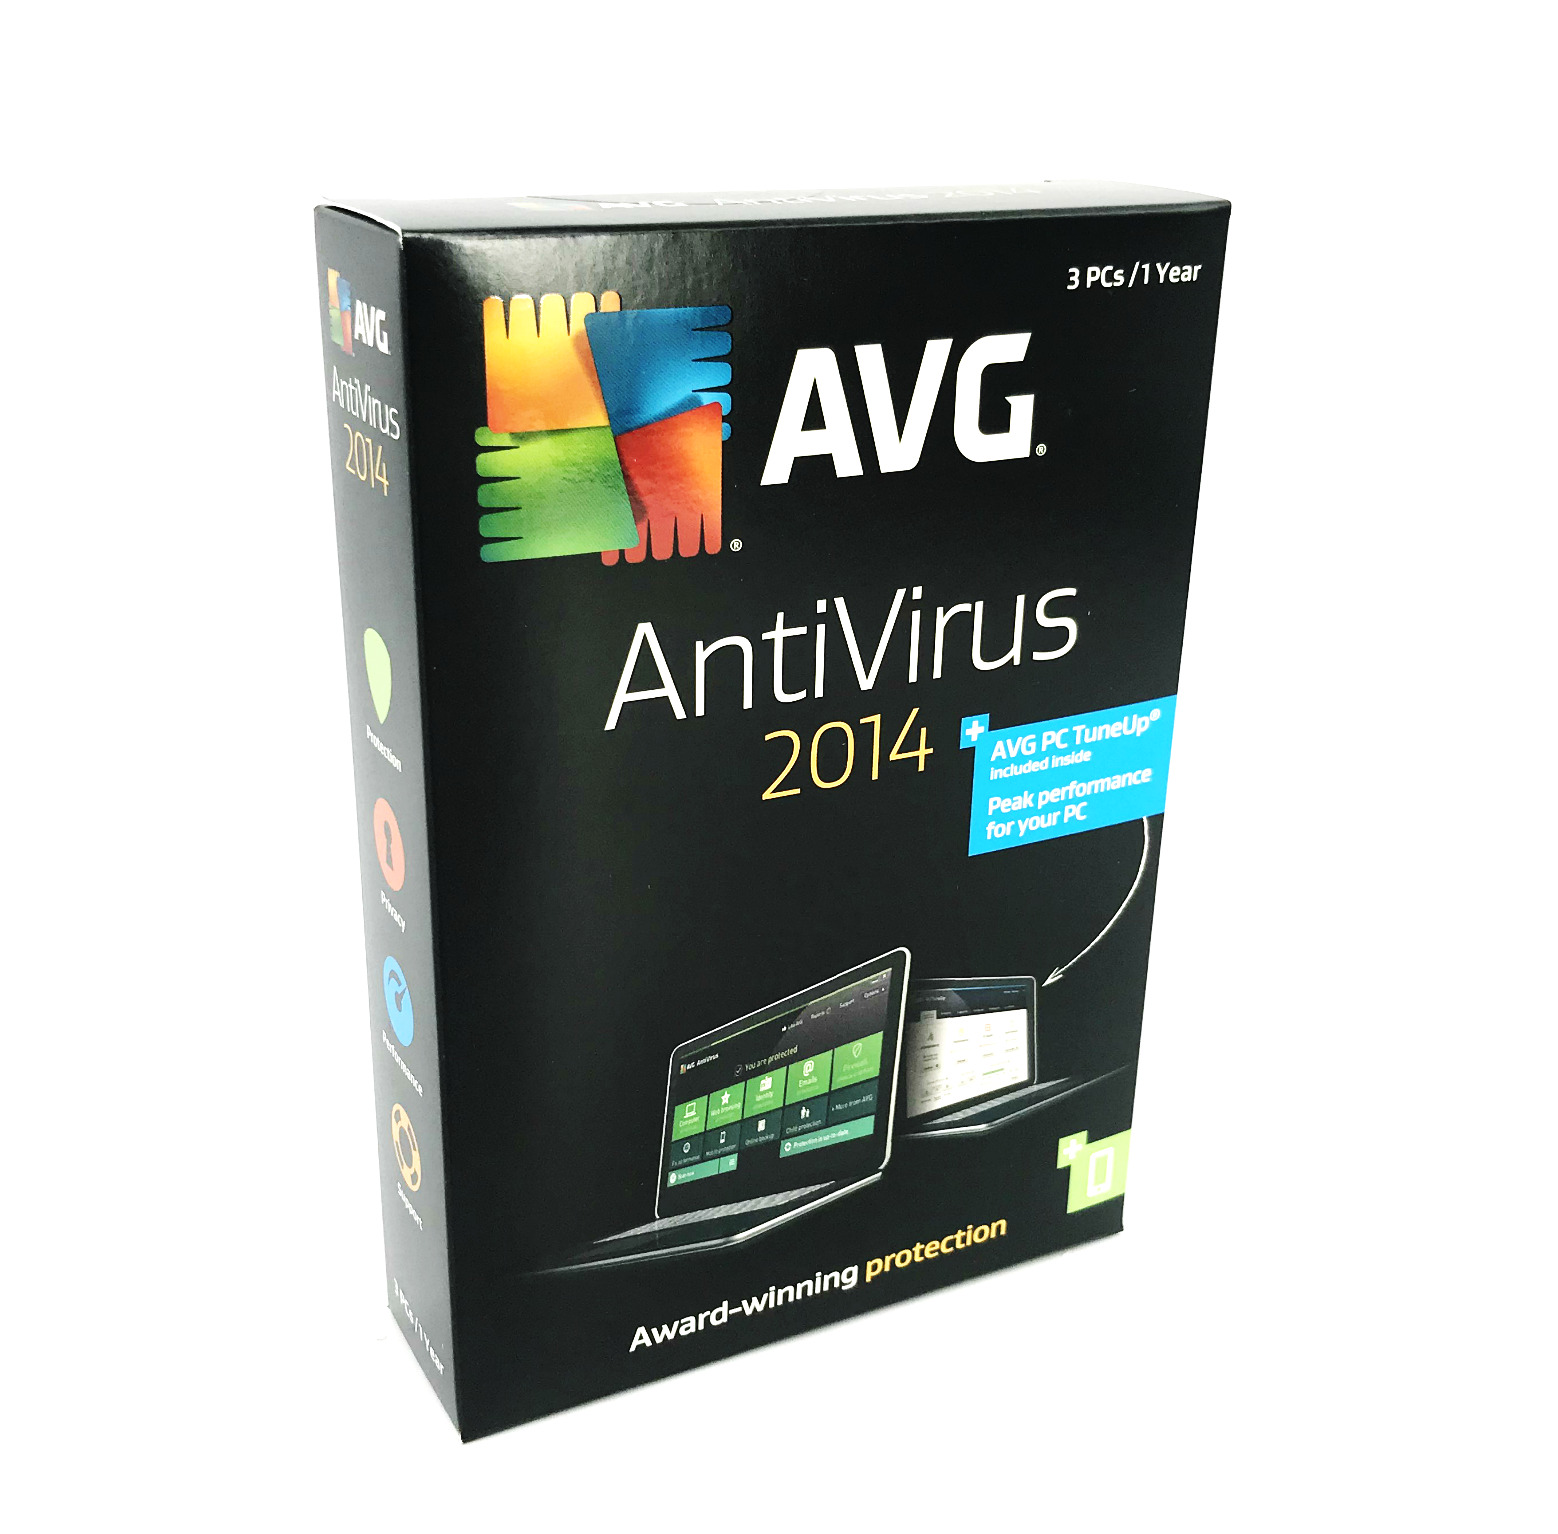 AVG AntiVirus Award - Winning Protection 2014 for 3PCs - 1 Year #3096